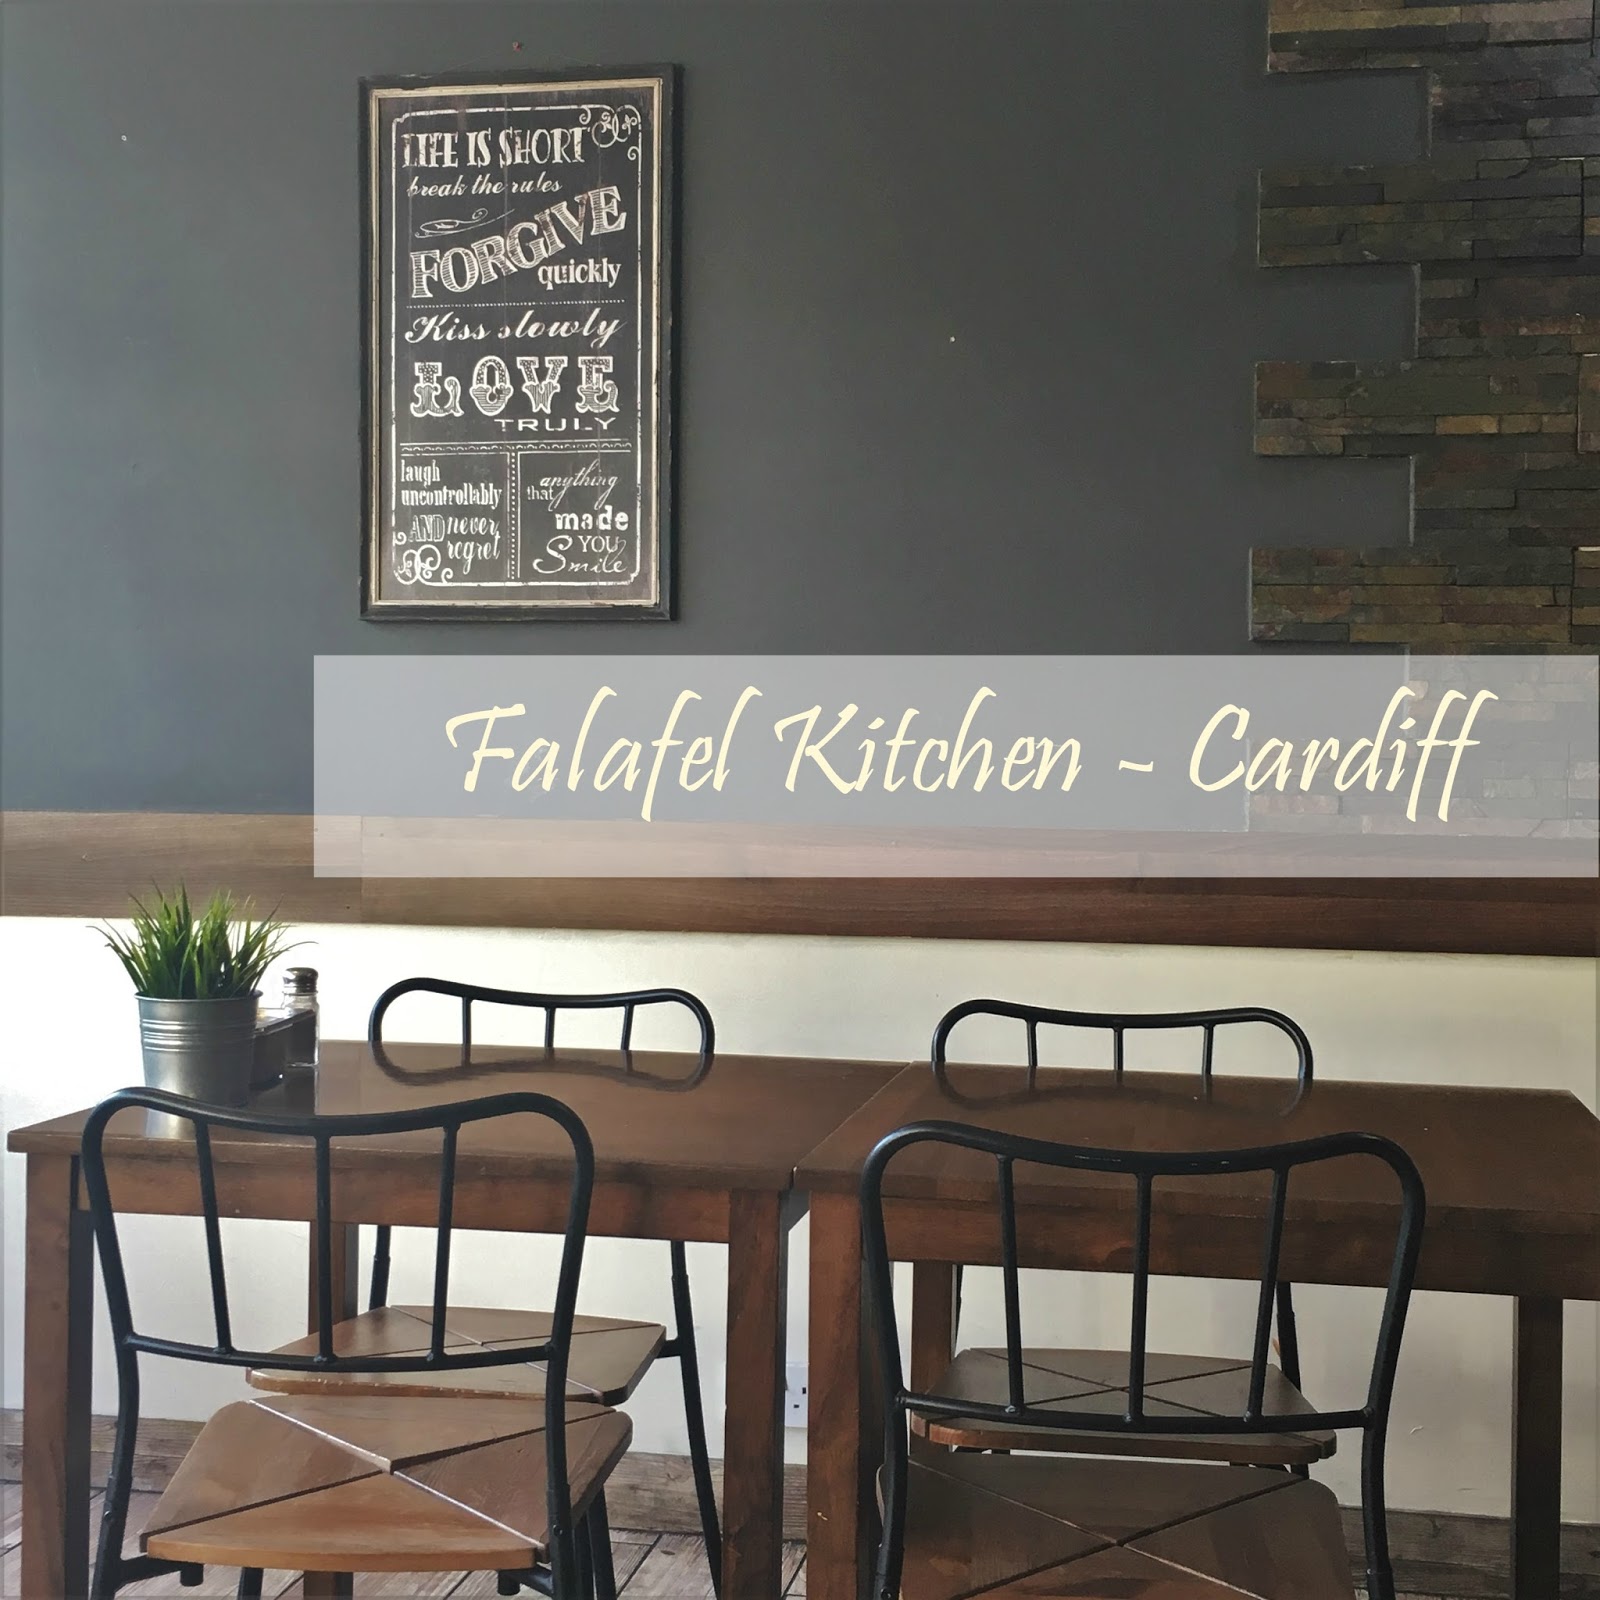 Falafel Kitchen - Cardiff